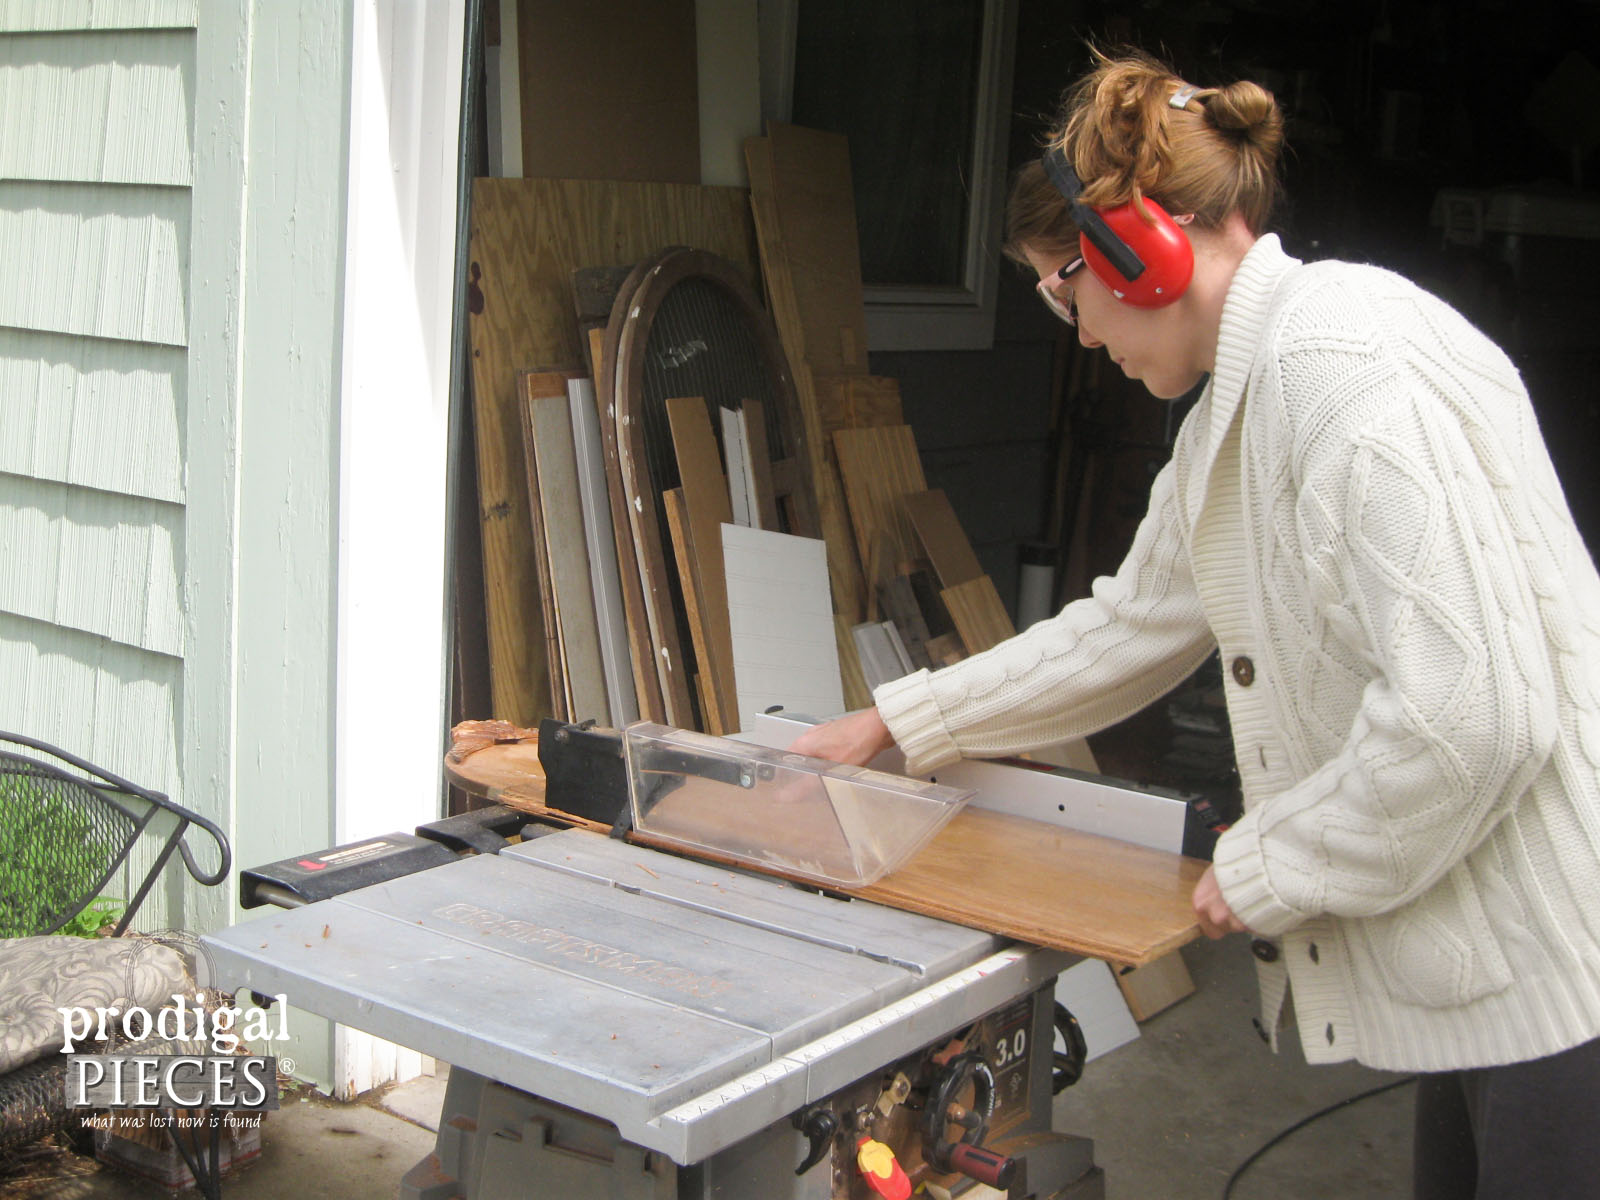 Using Table Saw to Cut Repurposed Chalkboard Menu | Prodigal Pieces | www.prodigalpieces.com